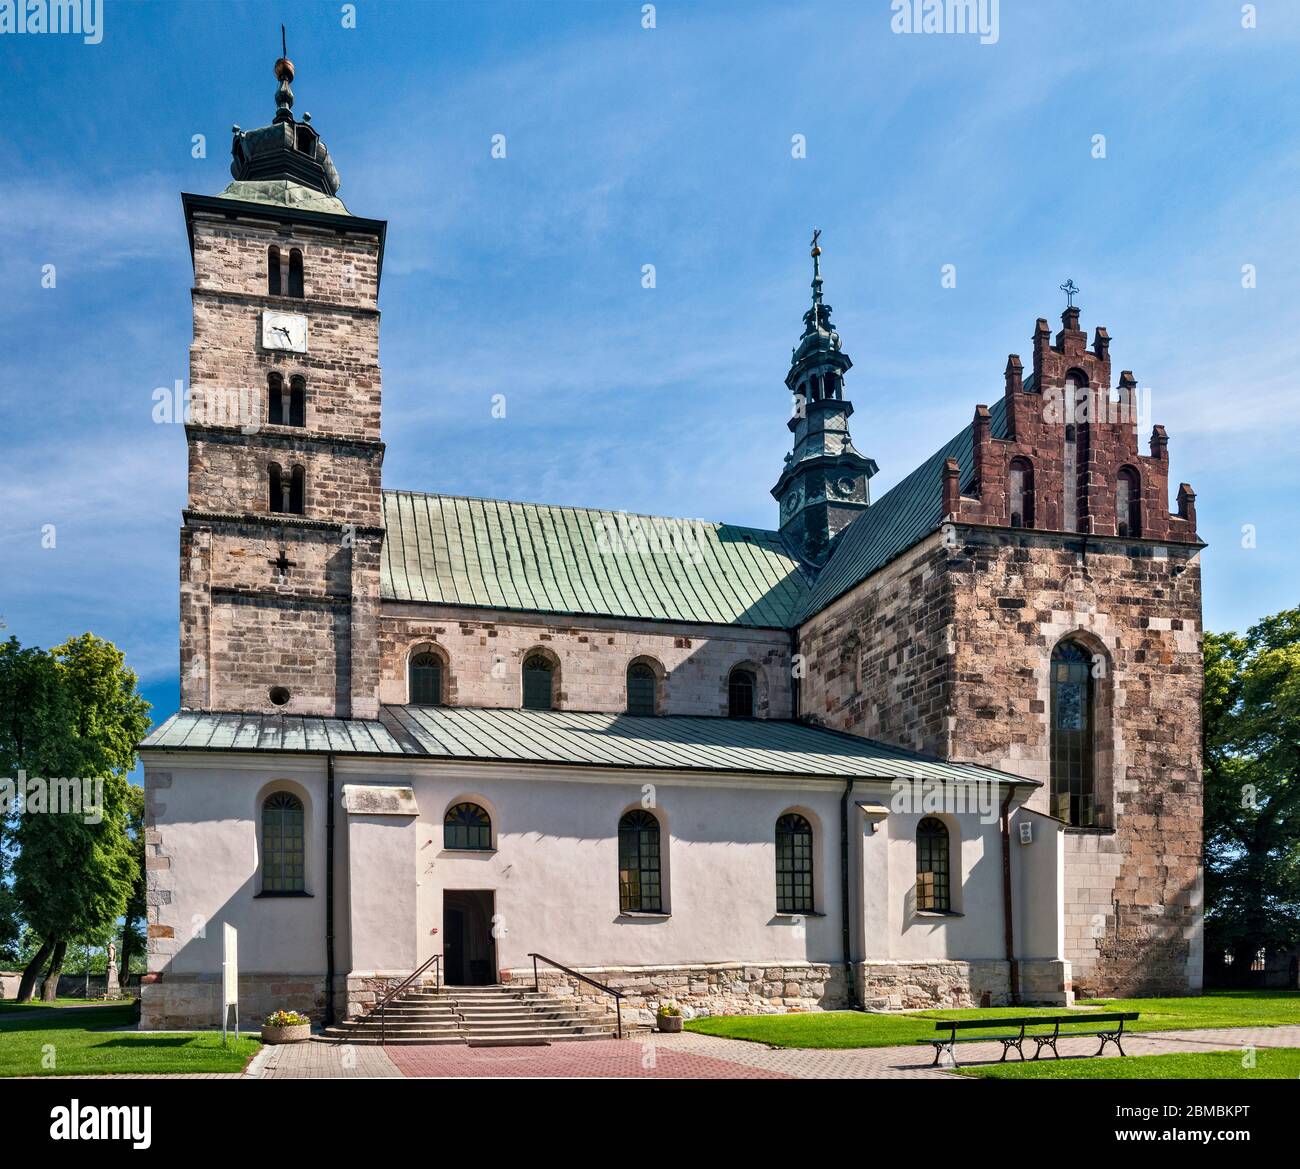 Collegiate Church of Saint Martin, 12th century, Romanesque style, in Opatow, Malopolska aka Lesser Poland region, Poland Stock Photo